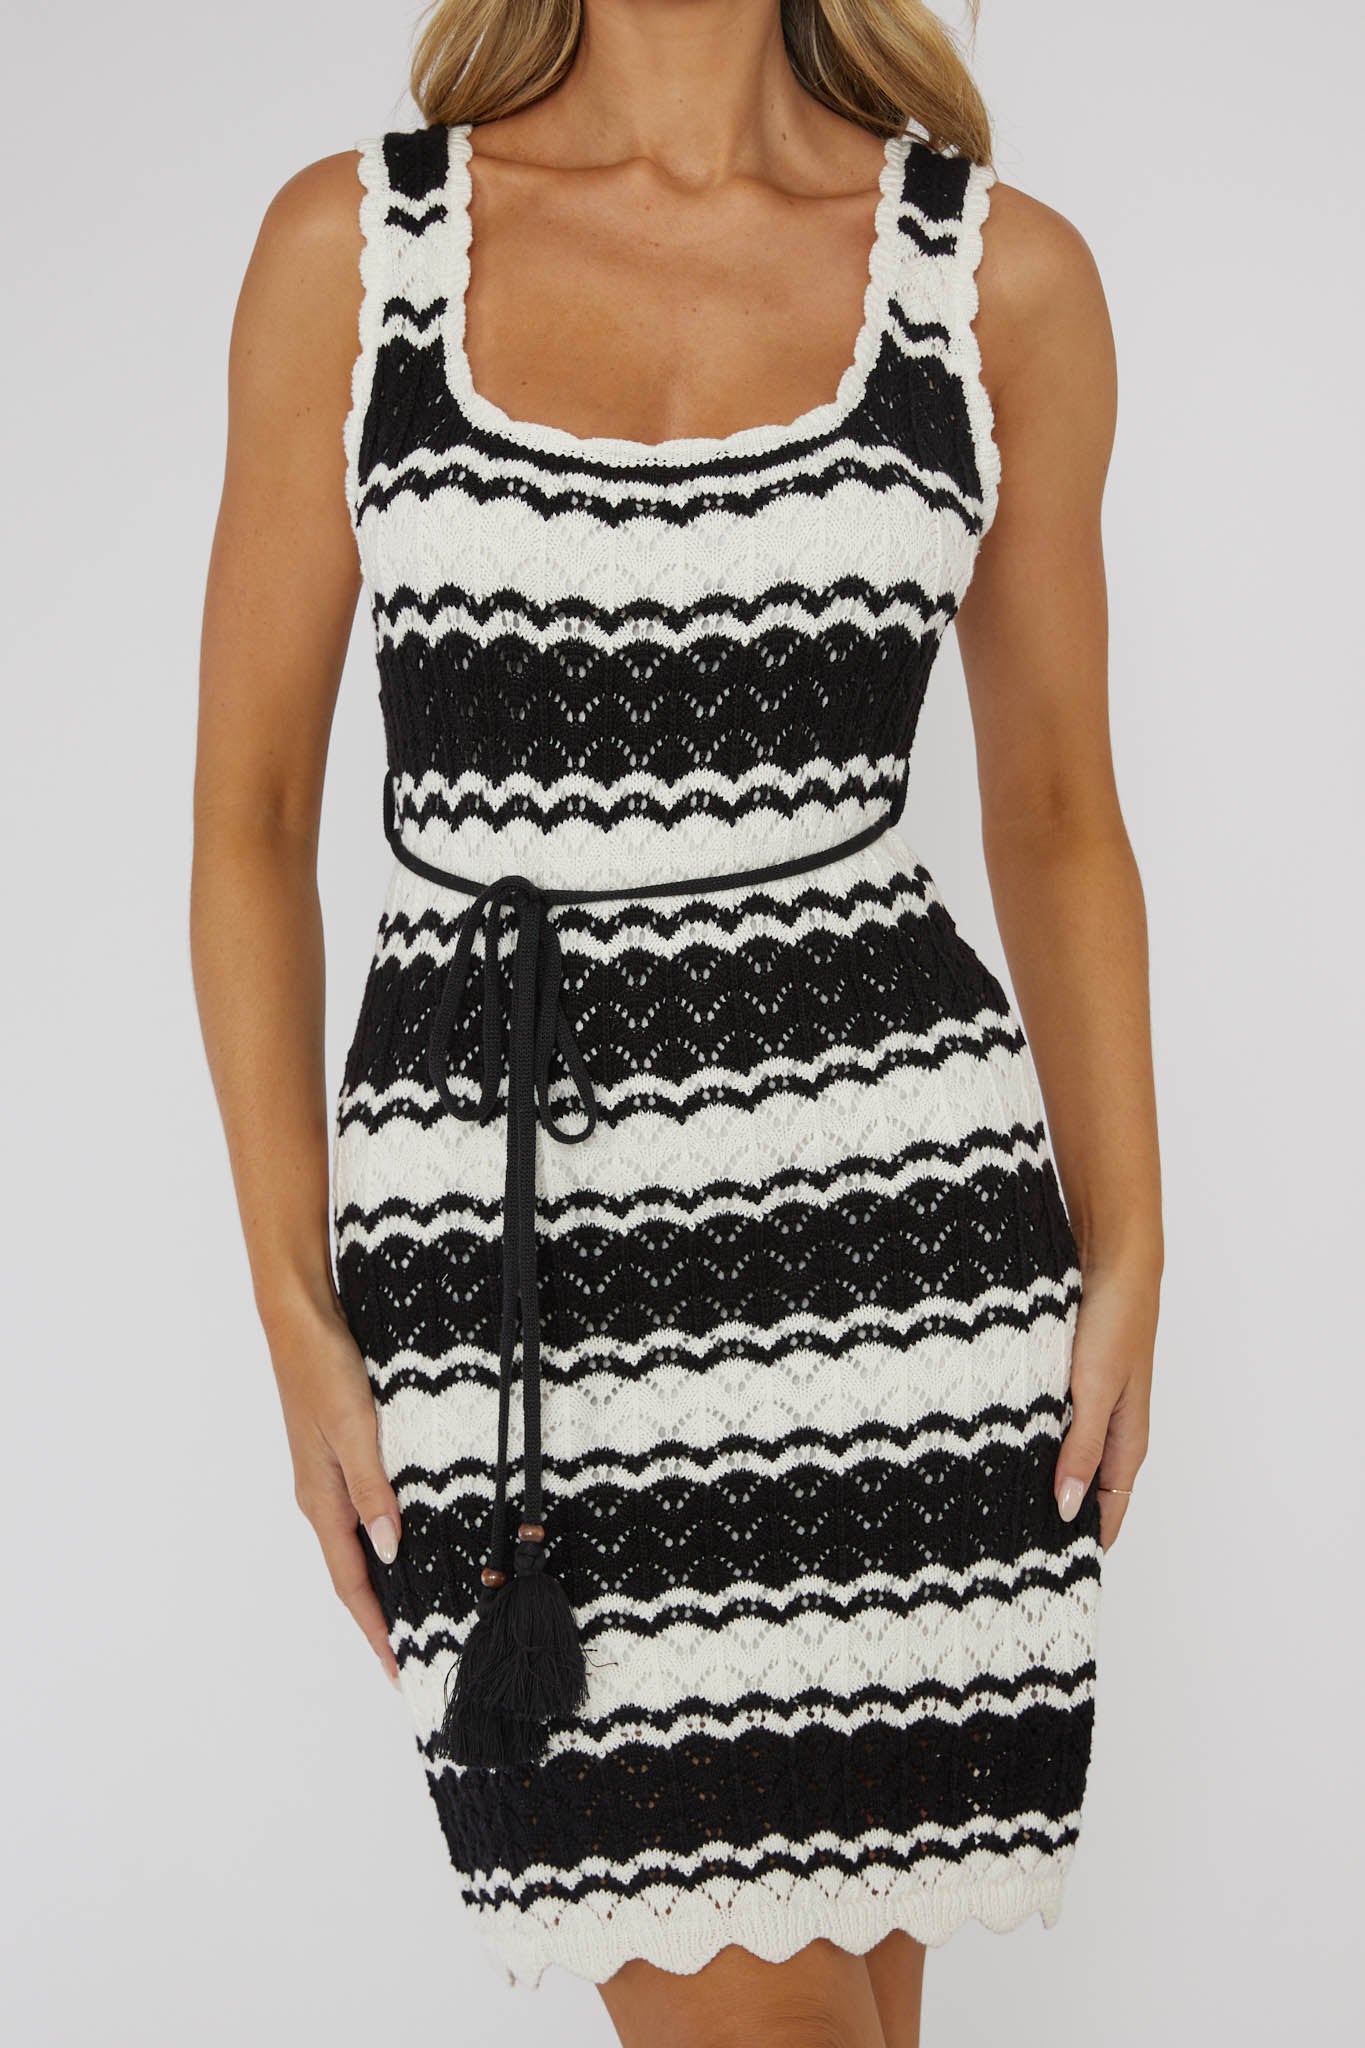 Shop the Wander Lust Crochet Mini Dress Striped Black | Selfie Leslie